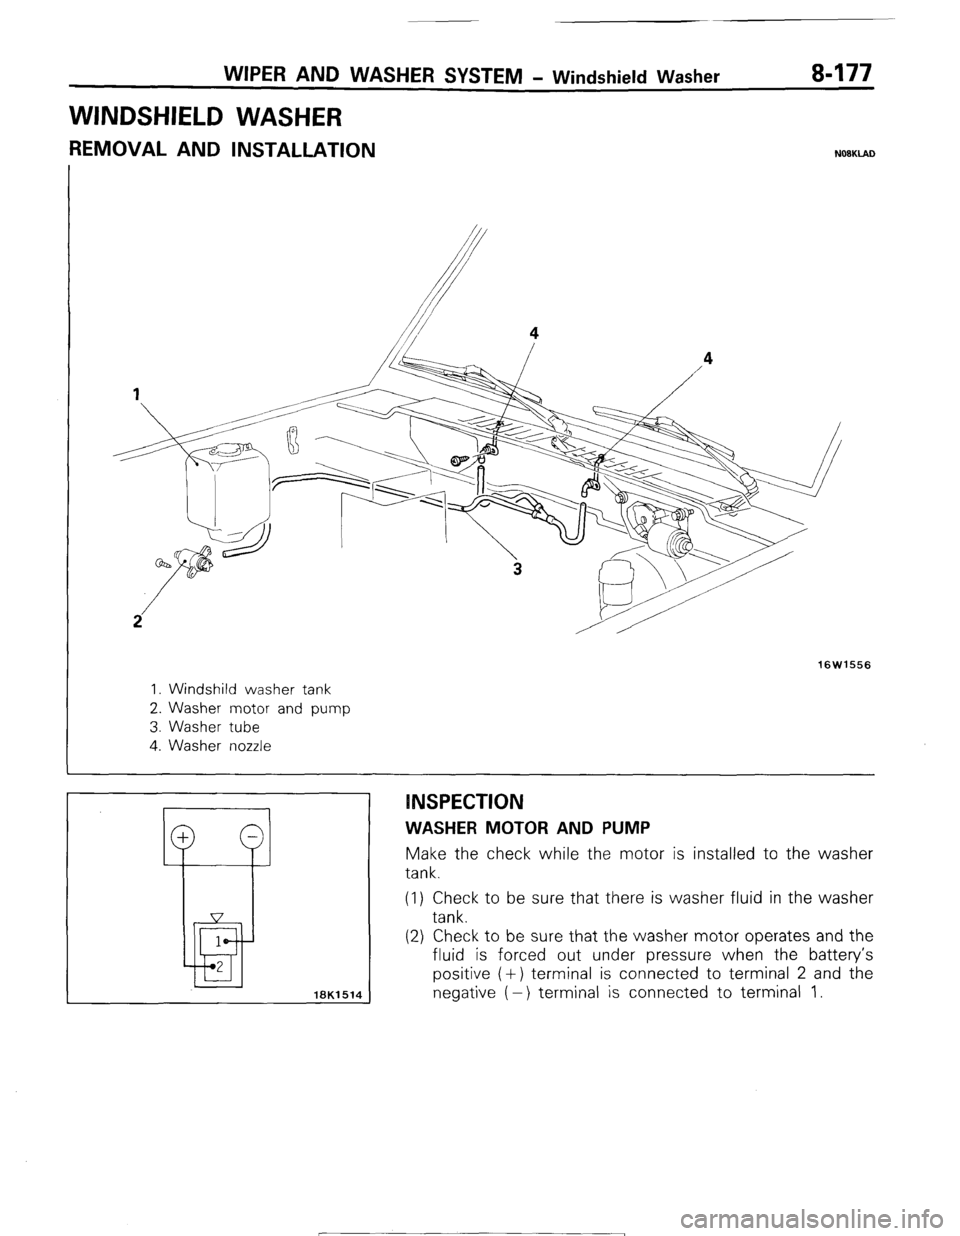 MITSUBISHI MONTERO 1987 1.G Workshop Manual WIPER AND WASHER SYSTEM - Windshield Washer 8-177 
WINDSHIELD WASHER 
REMOVAL AND INSTALLATION N08KlAD 
16W1556 
1. Windshild washer tank 
2. Washer motor and pump 
3. Washer tube 
4. Washer nozzle 
: